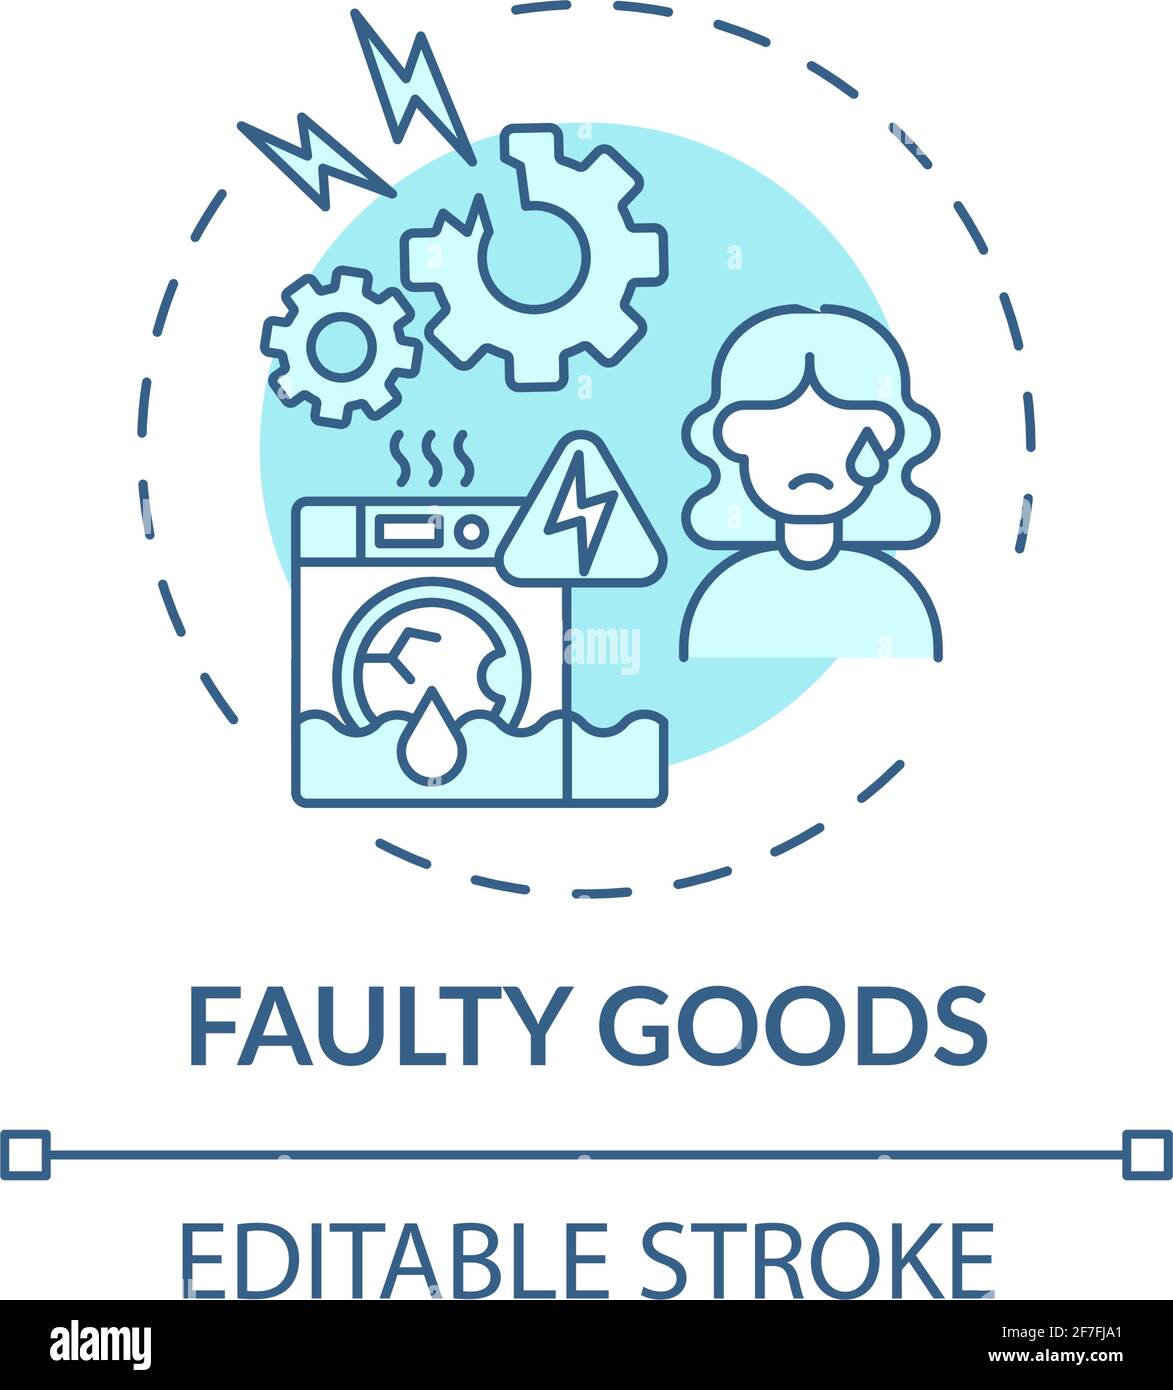 Faulty goods concept icon Stock Vector